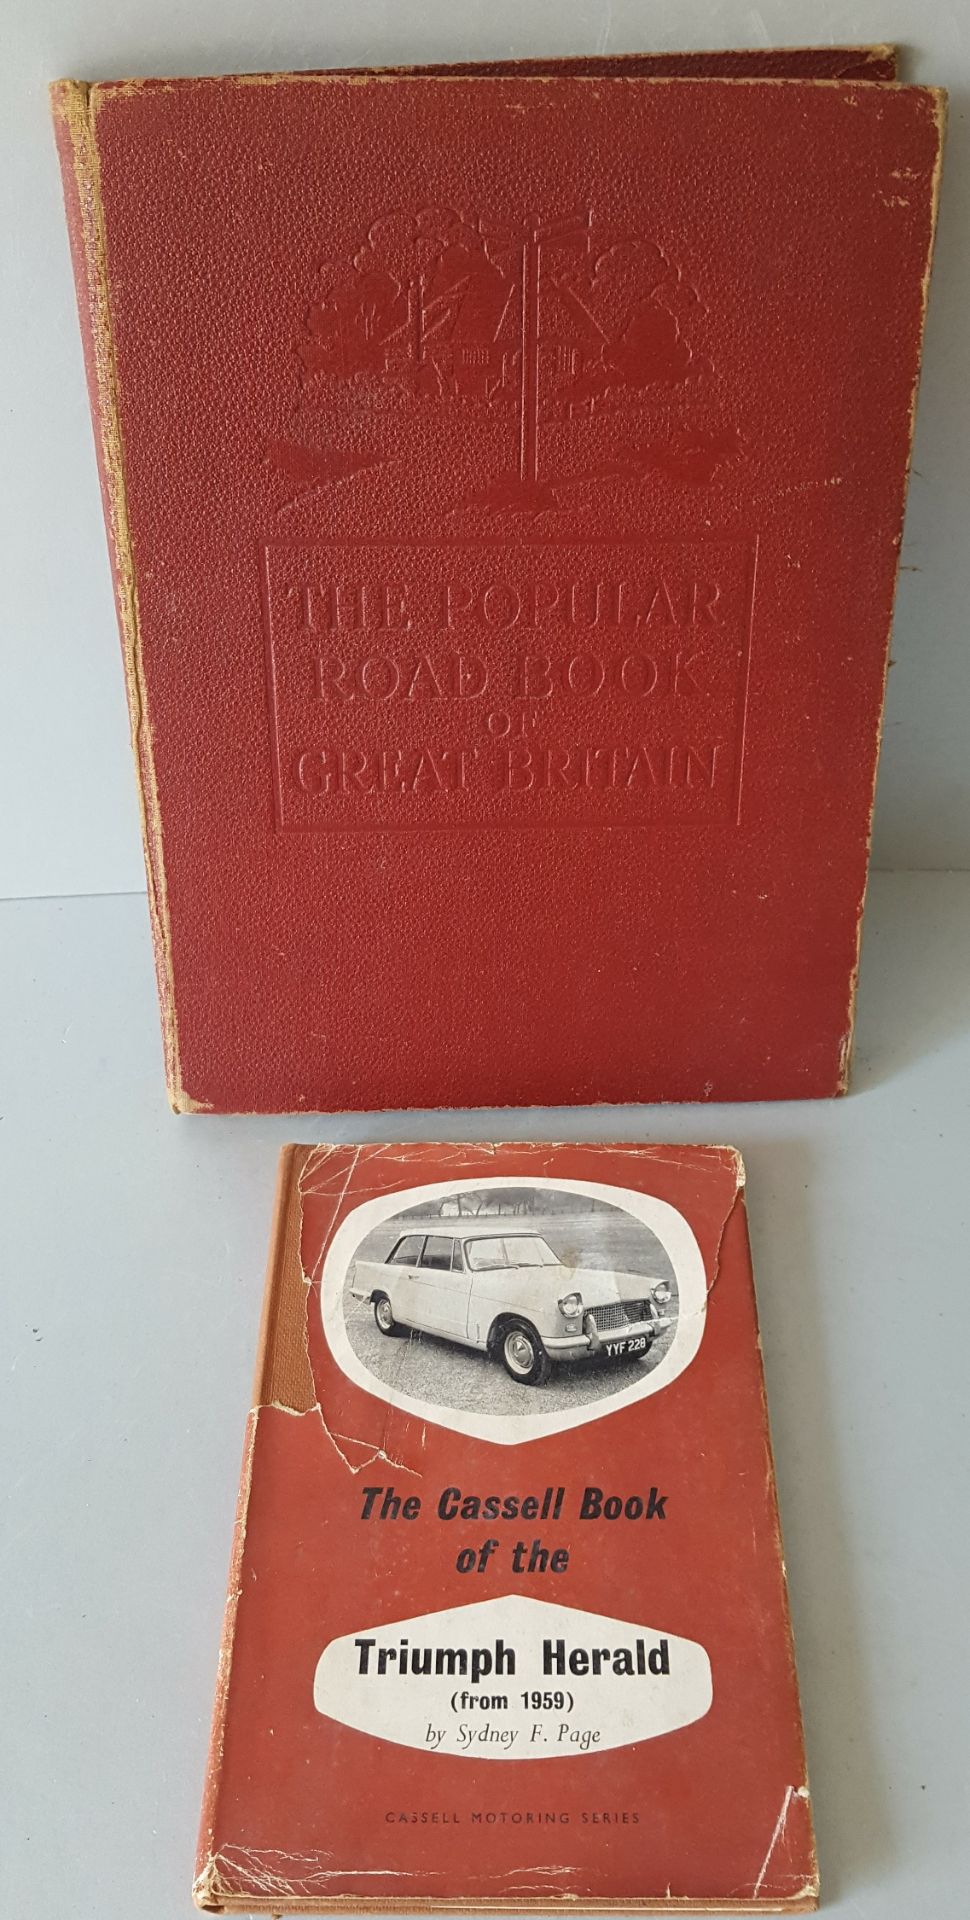 Vintage Motoring Books Automobilia Includes Triumph Herald & Ford Cortina - Image 3 of 3